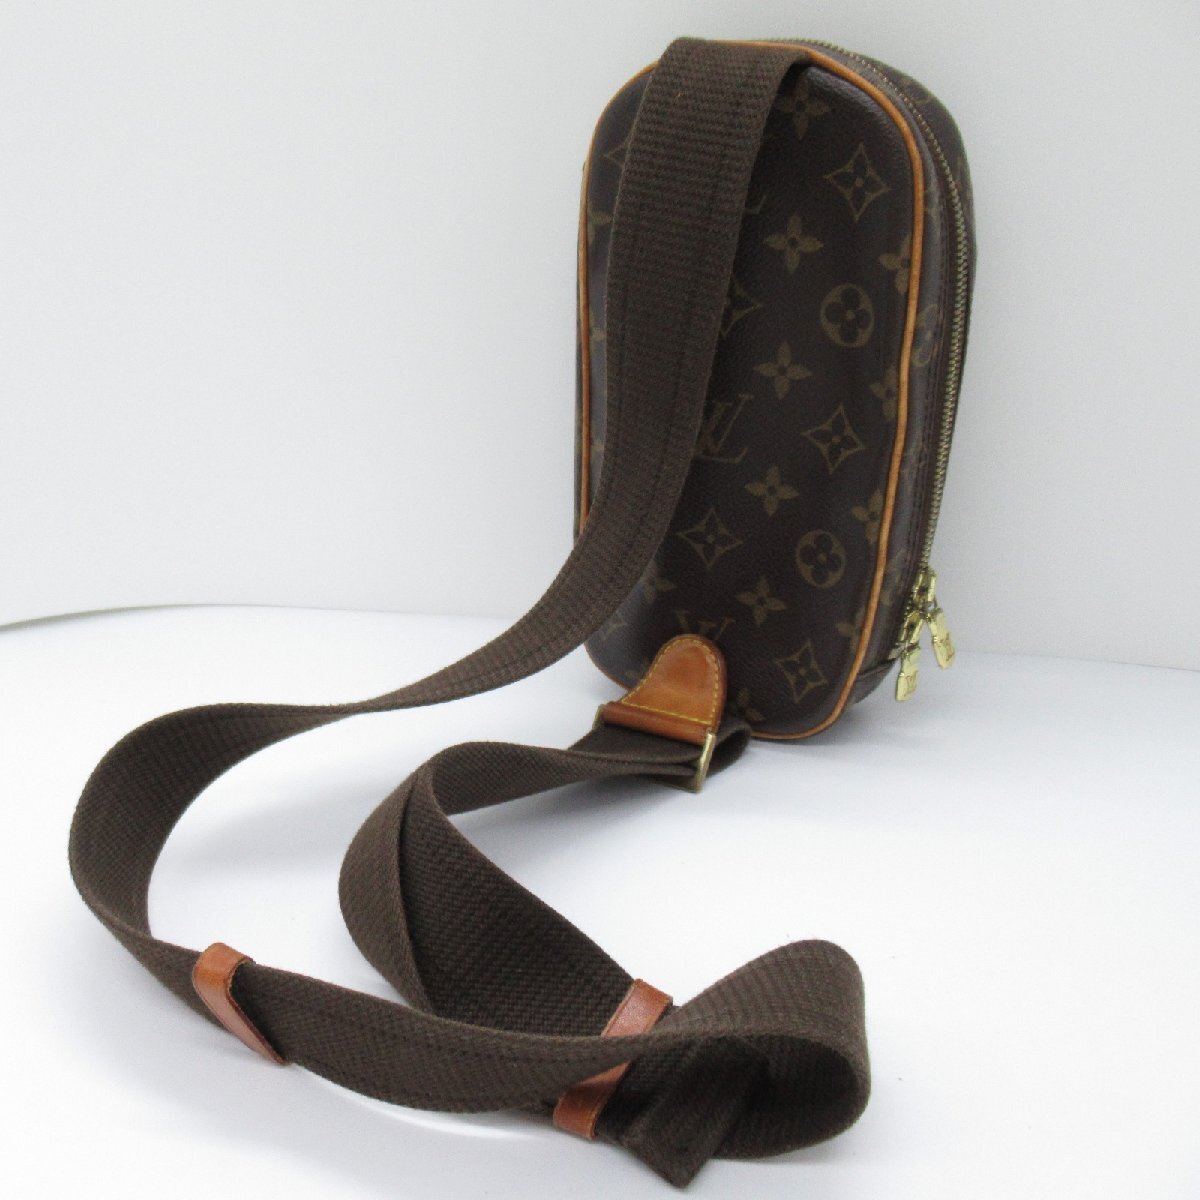  Louis * Vuitton небольшая сумочка gun ju бренд off LOUIS VUITTON сумка-пояс сумка "body" монограмма б/у женский 